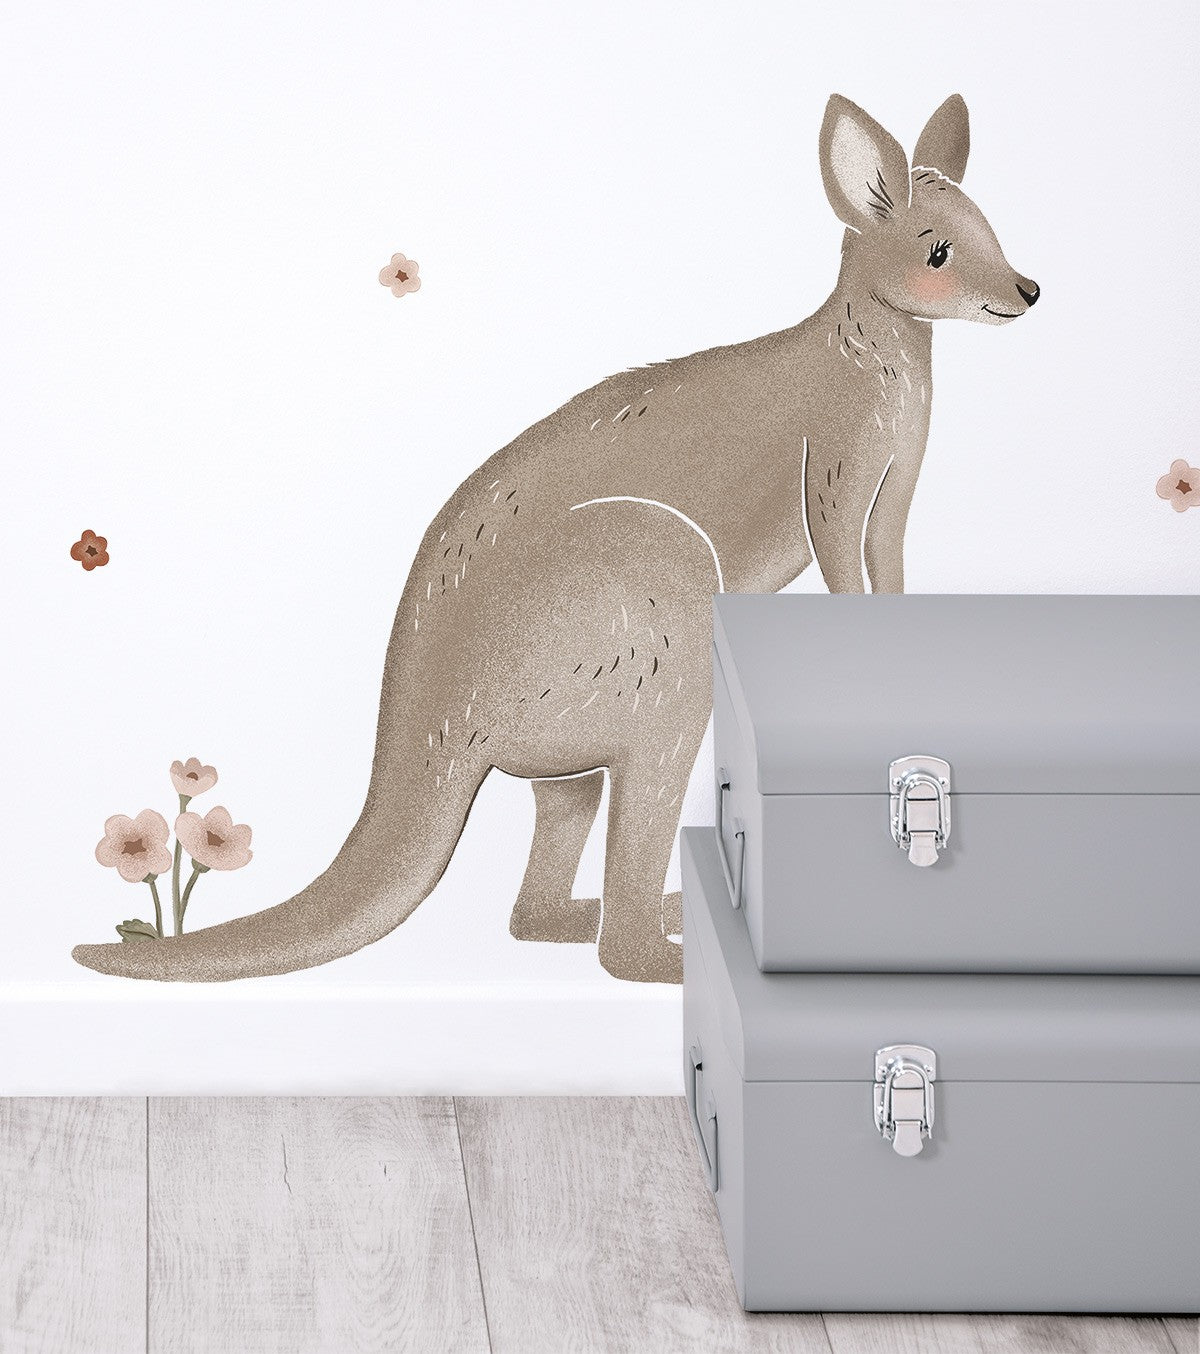 LILYDALE - Big Wall decals - The kangaroos